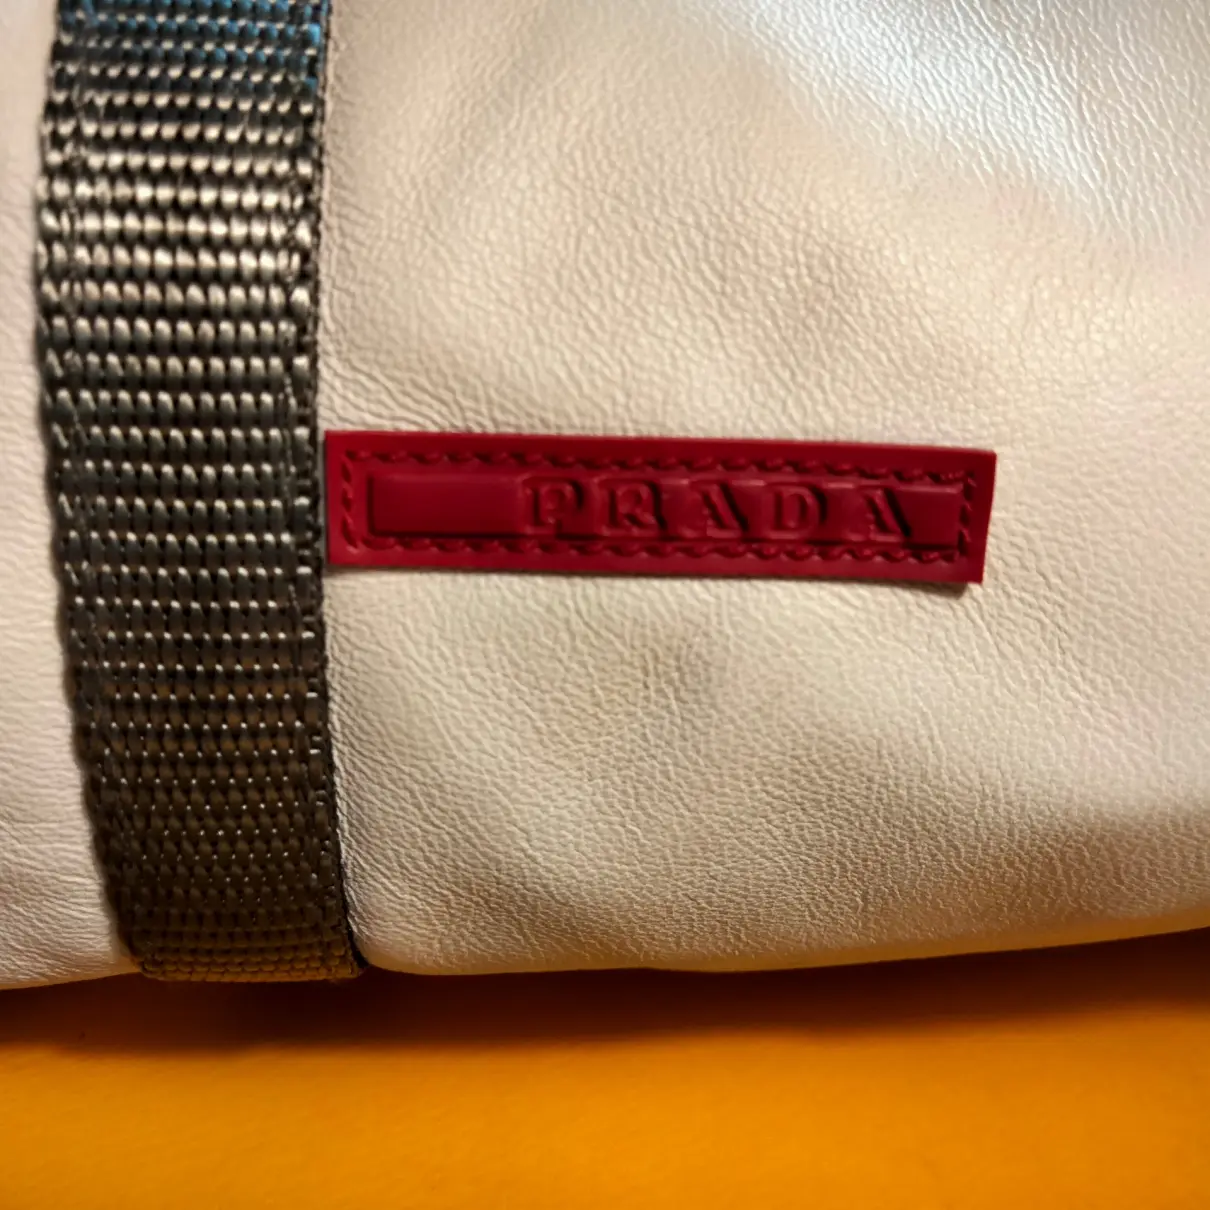 Buy Prada Tessuto leather handbag online